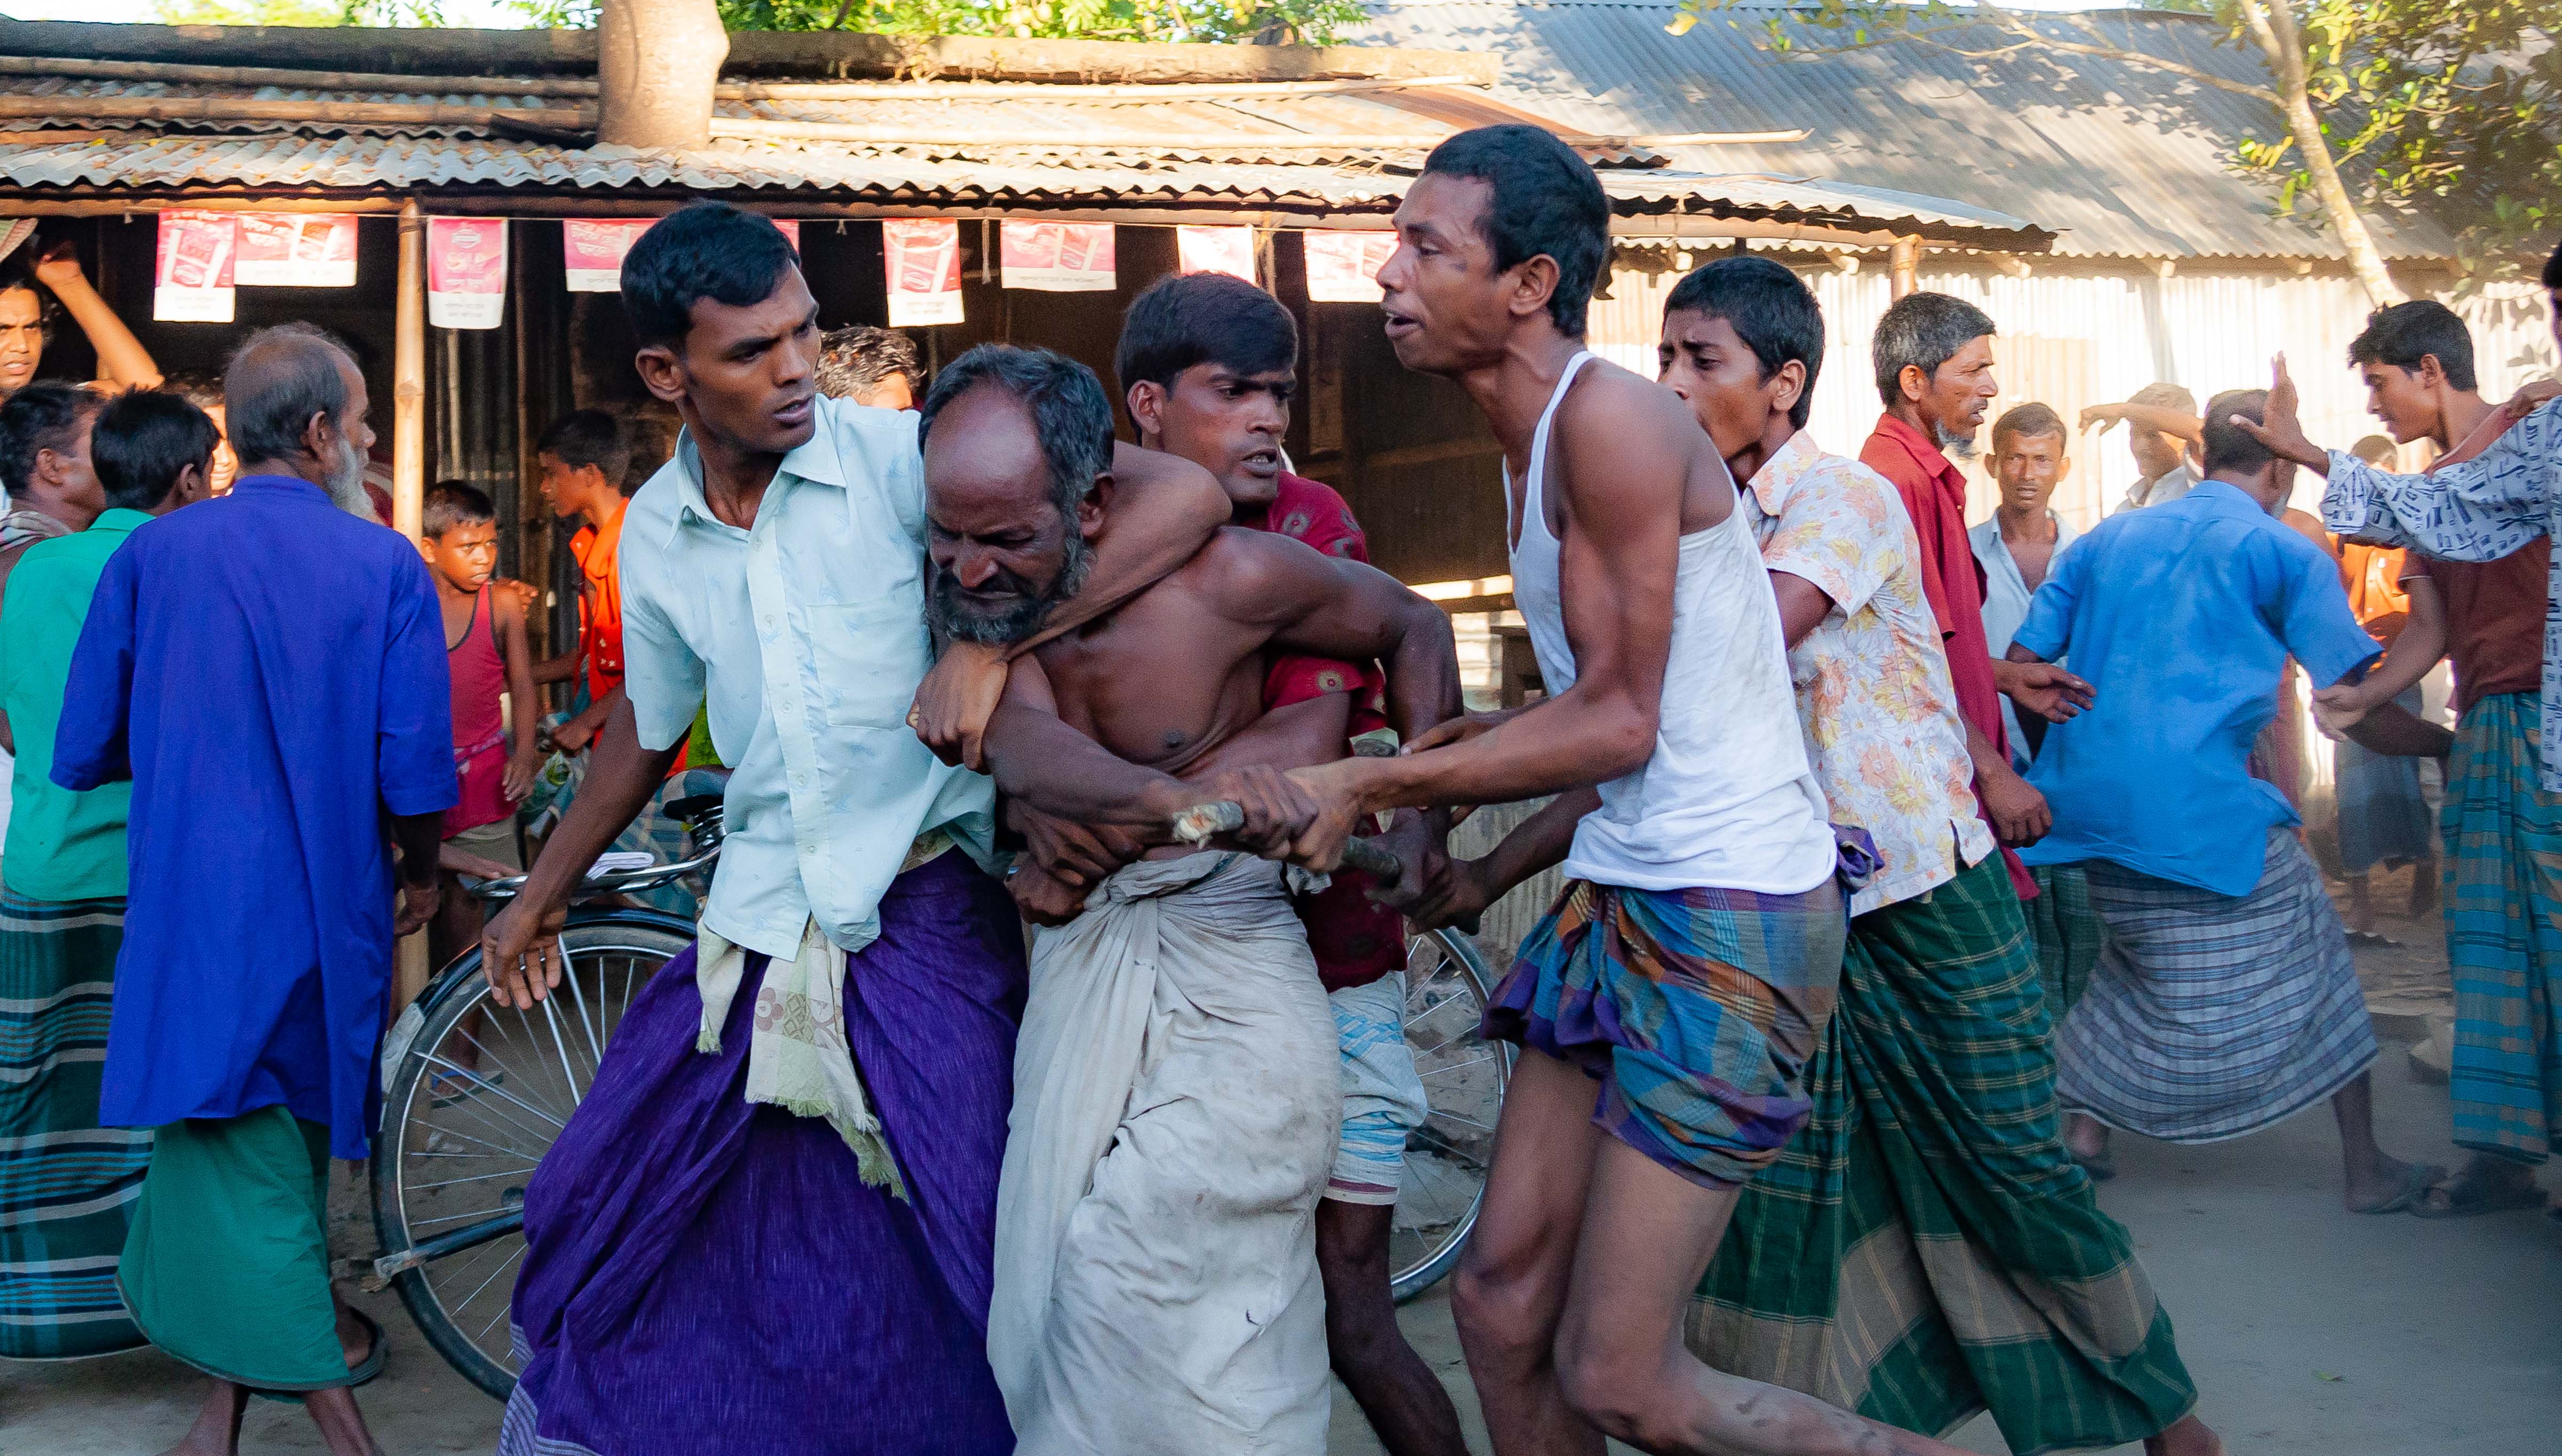 Bangladesh, Sherpur Prov, Crowd Accosts Old Man, 2009, IMG 8840